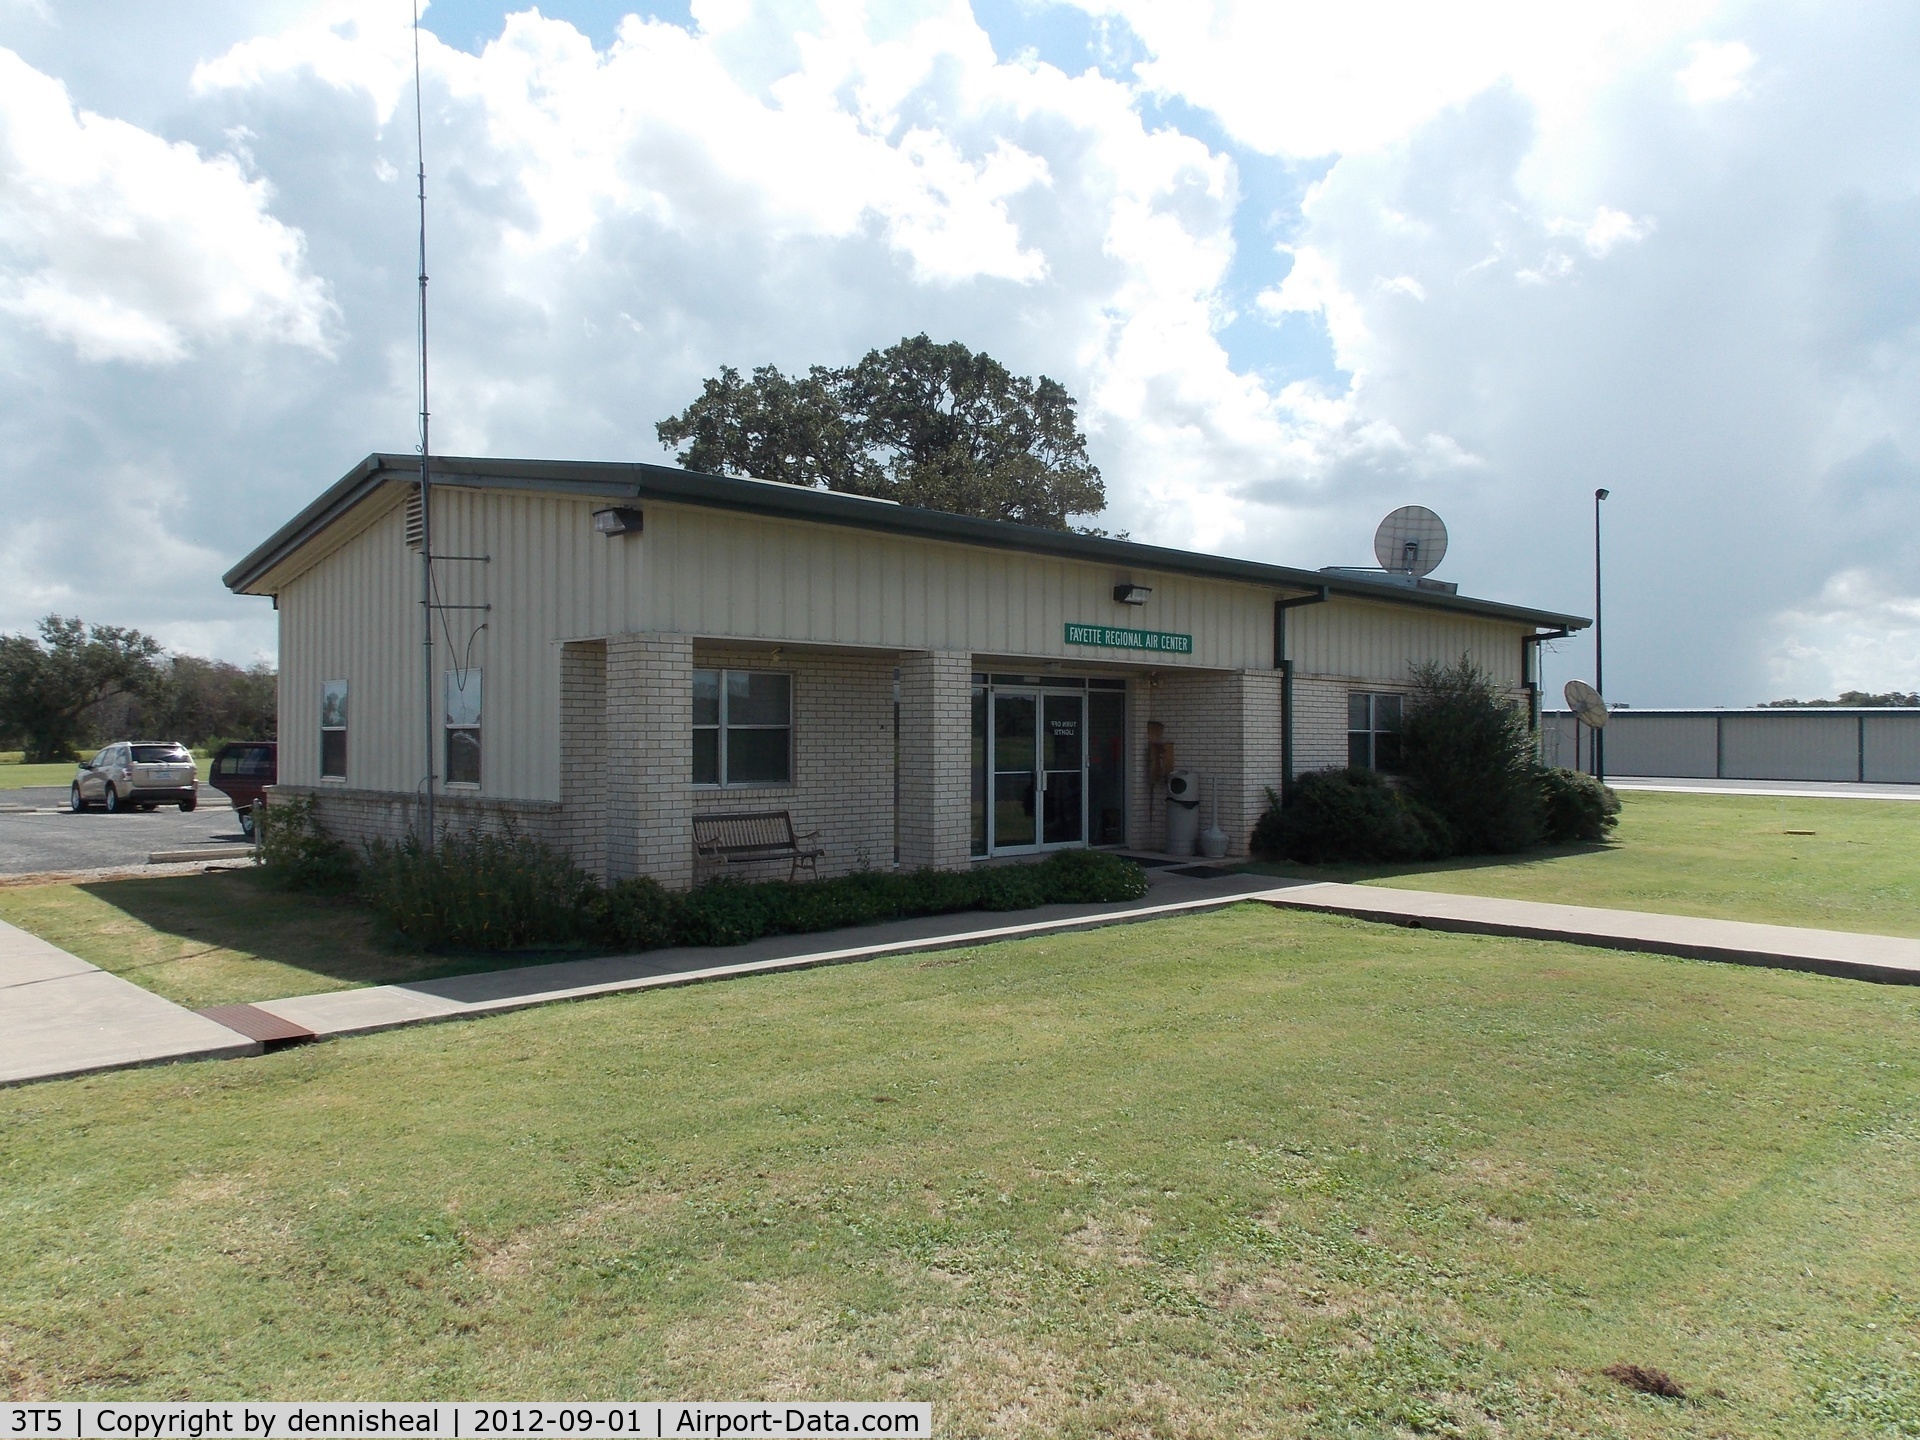 Fayette Regional Air Center Airport (3T5) - La Grange Texas airport office